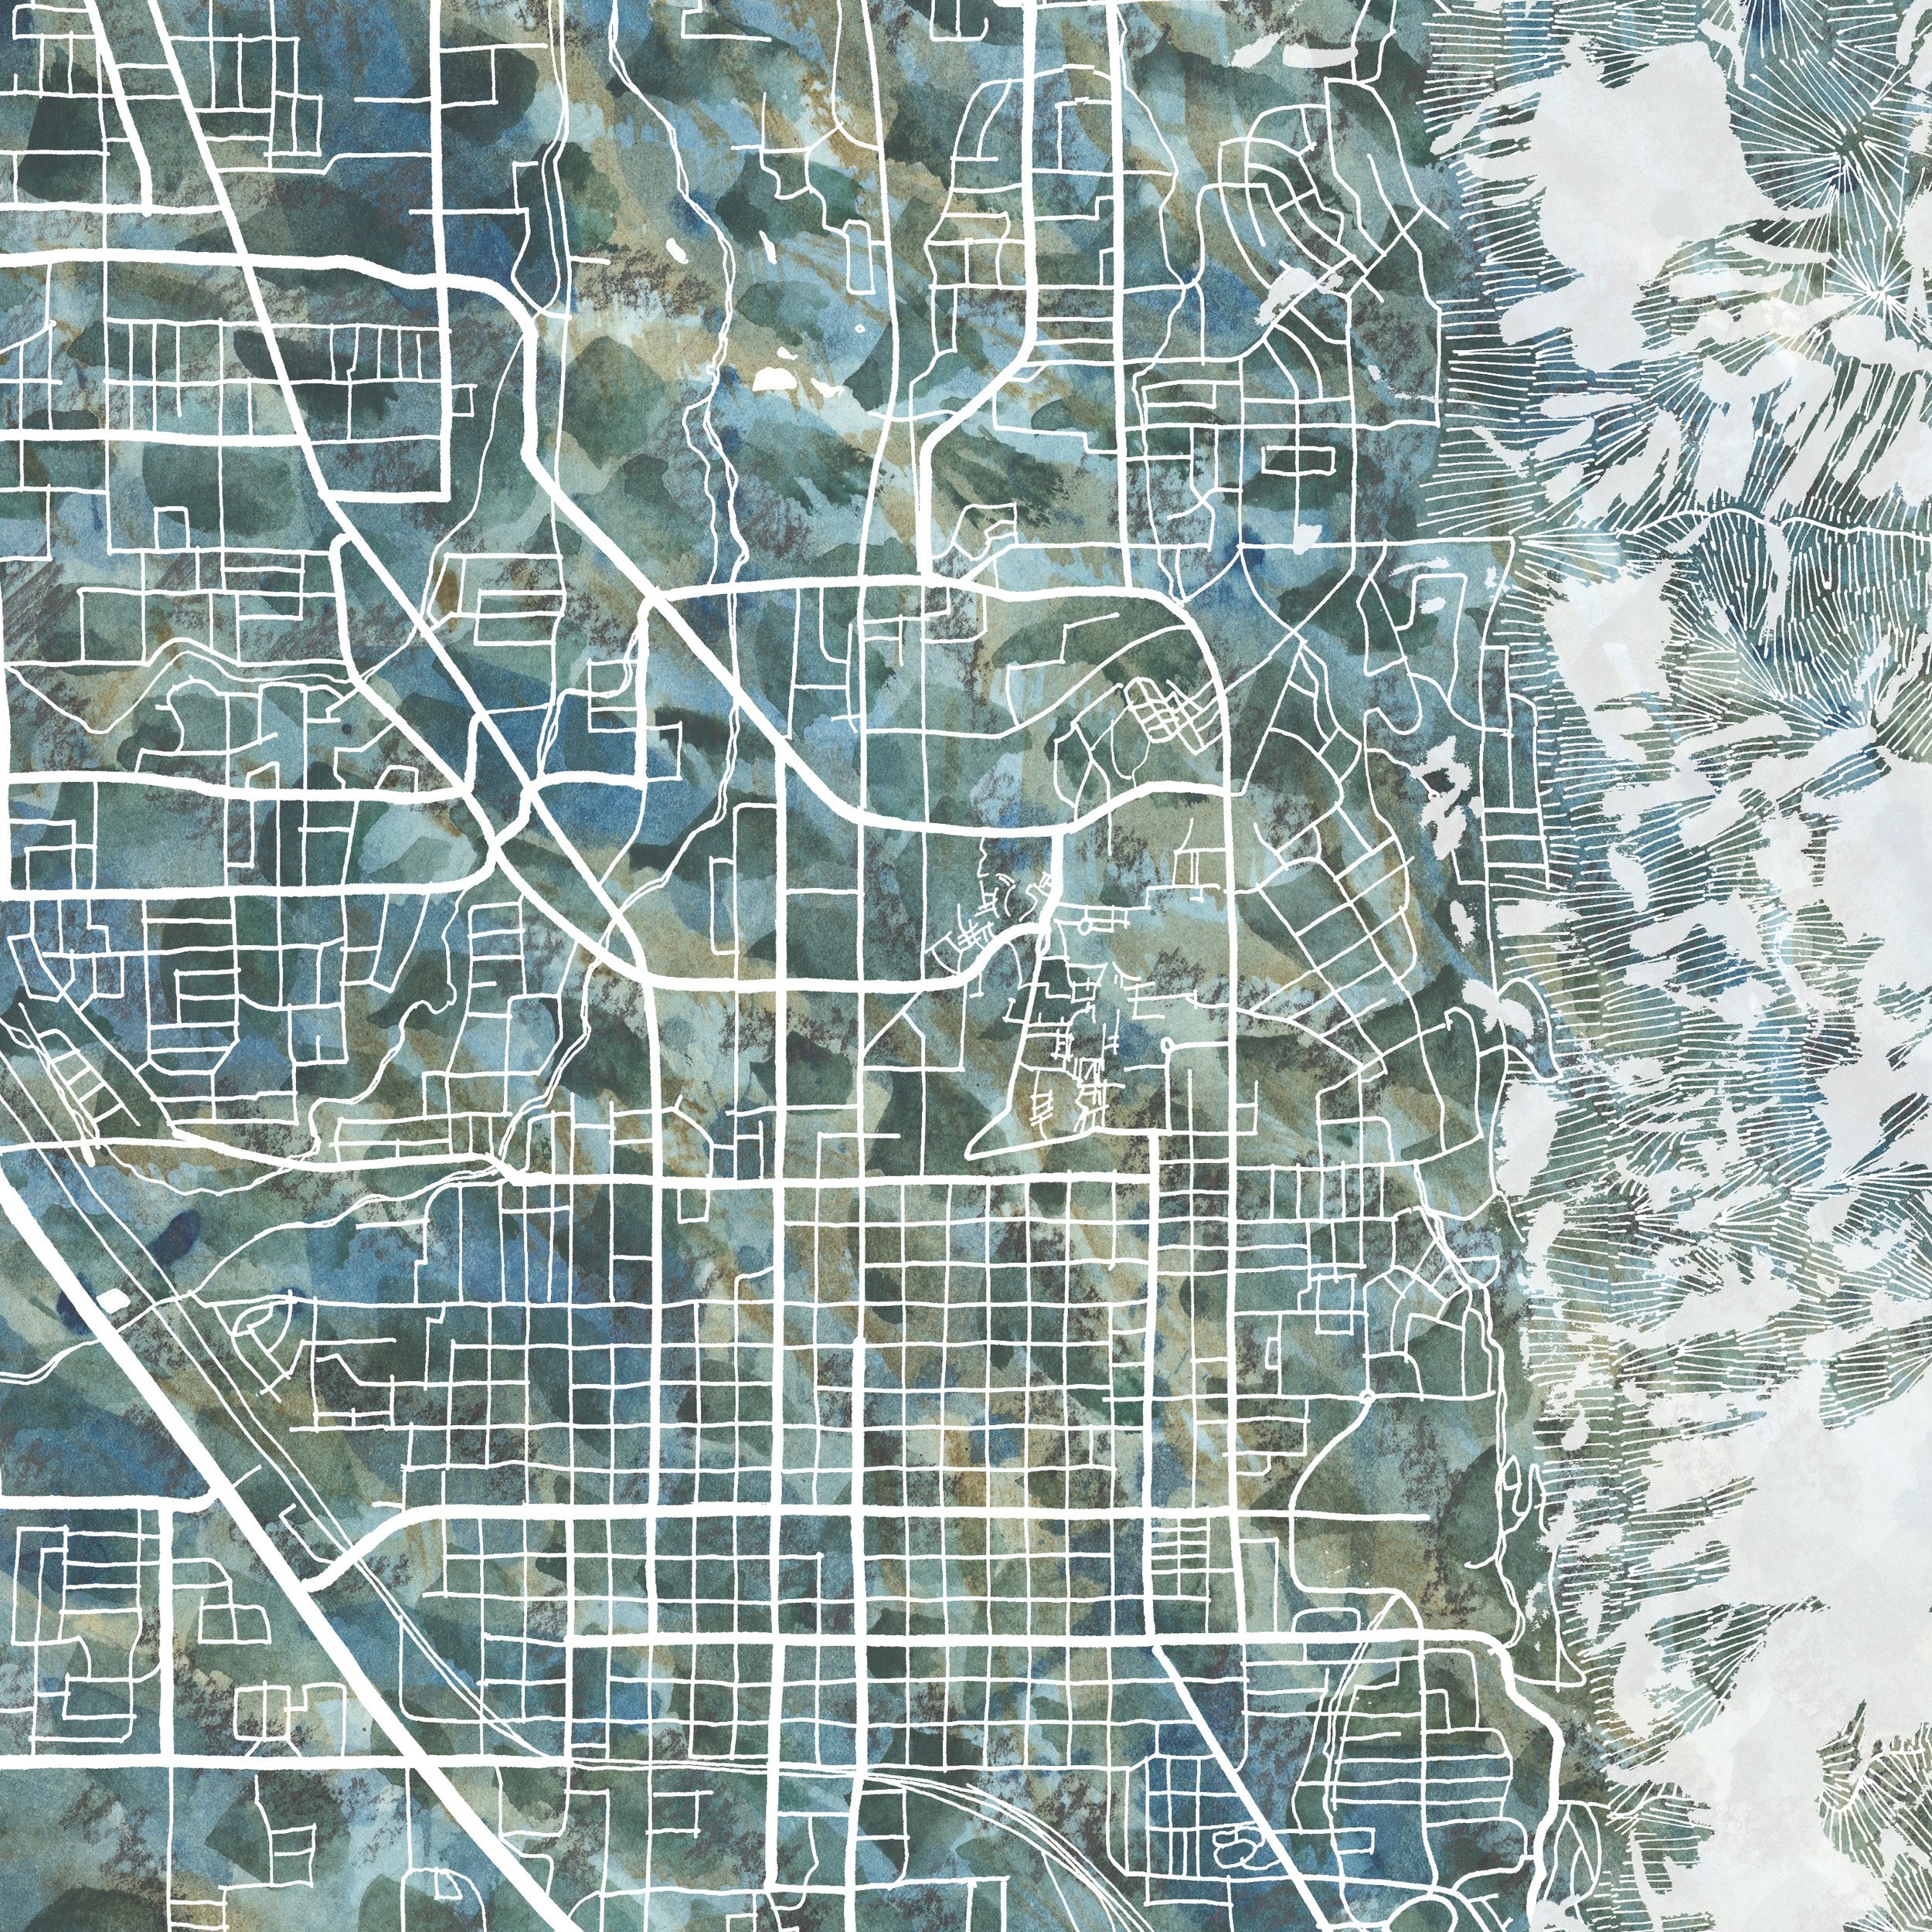 PROVO Urban Fabrics City Map: PRINT